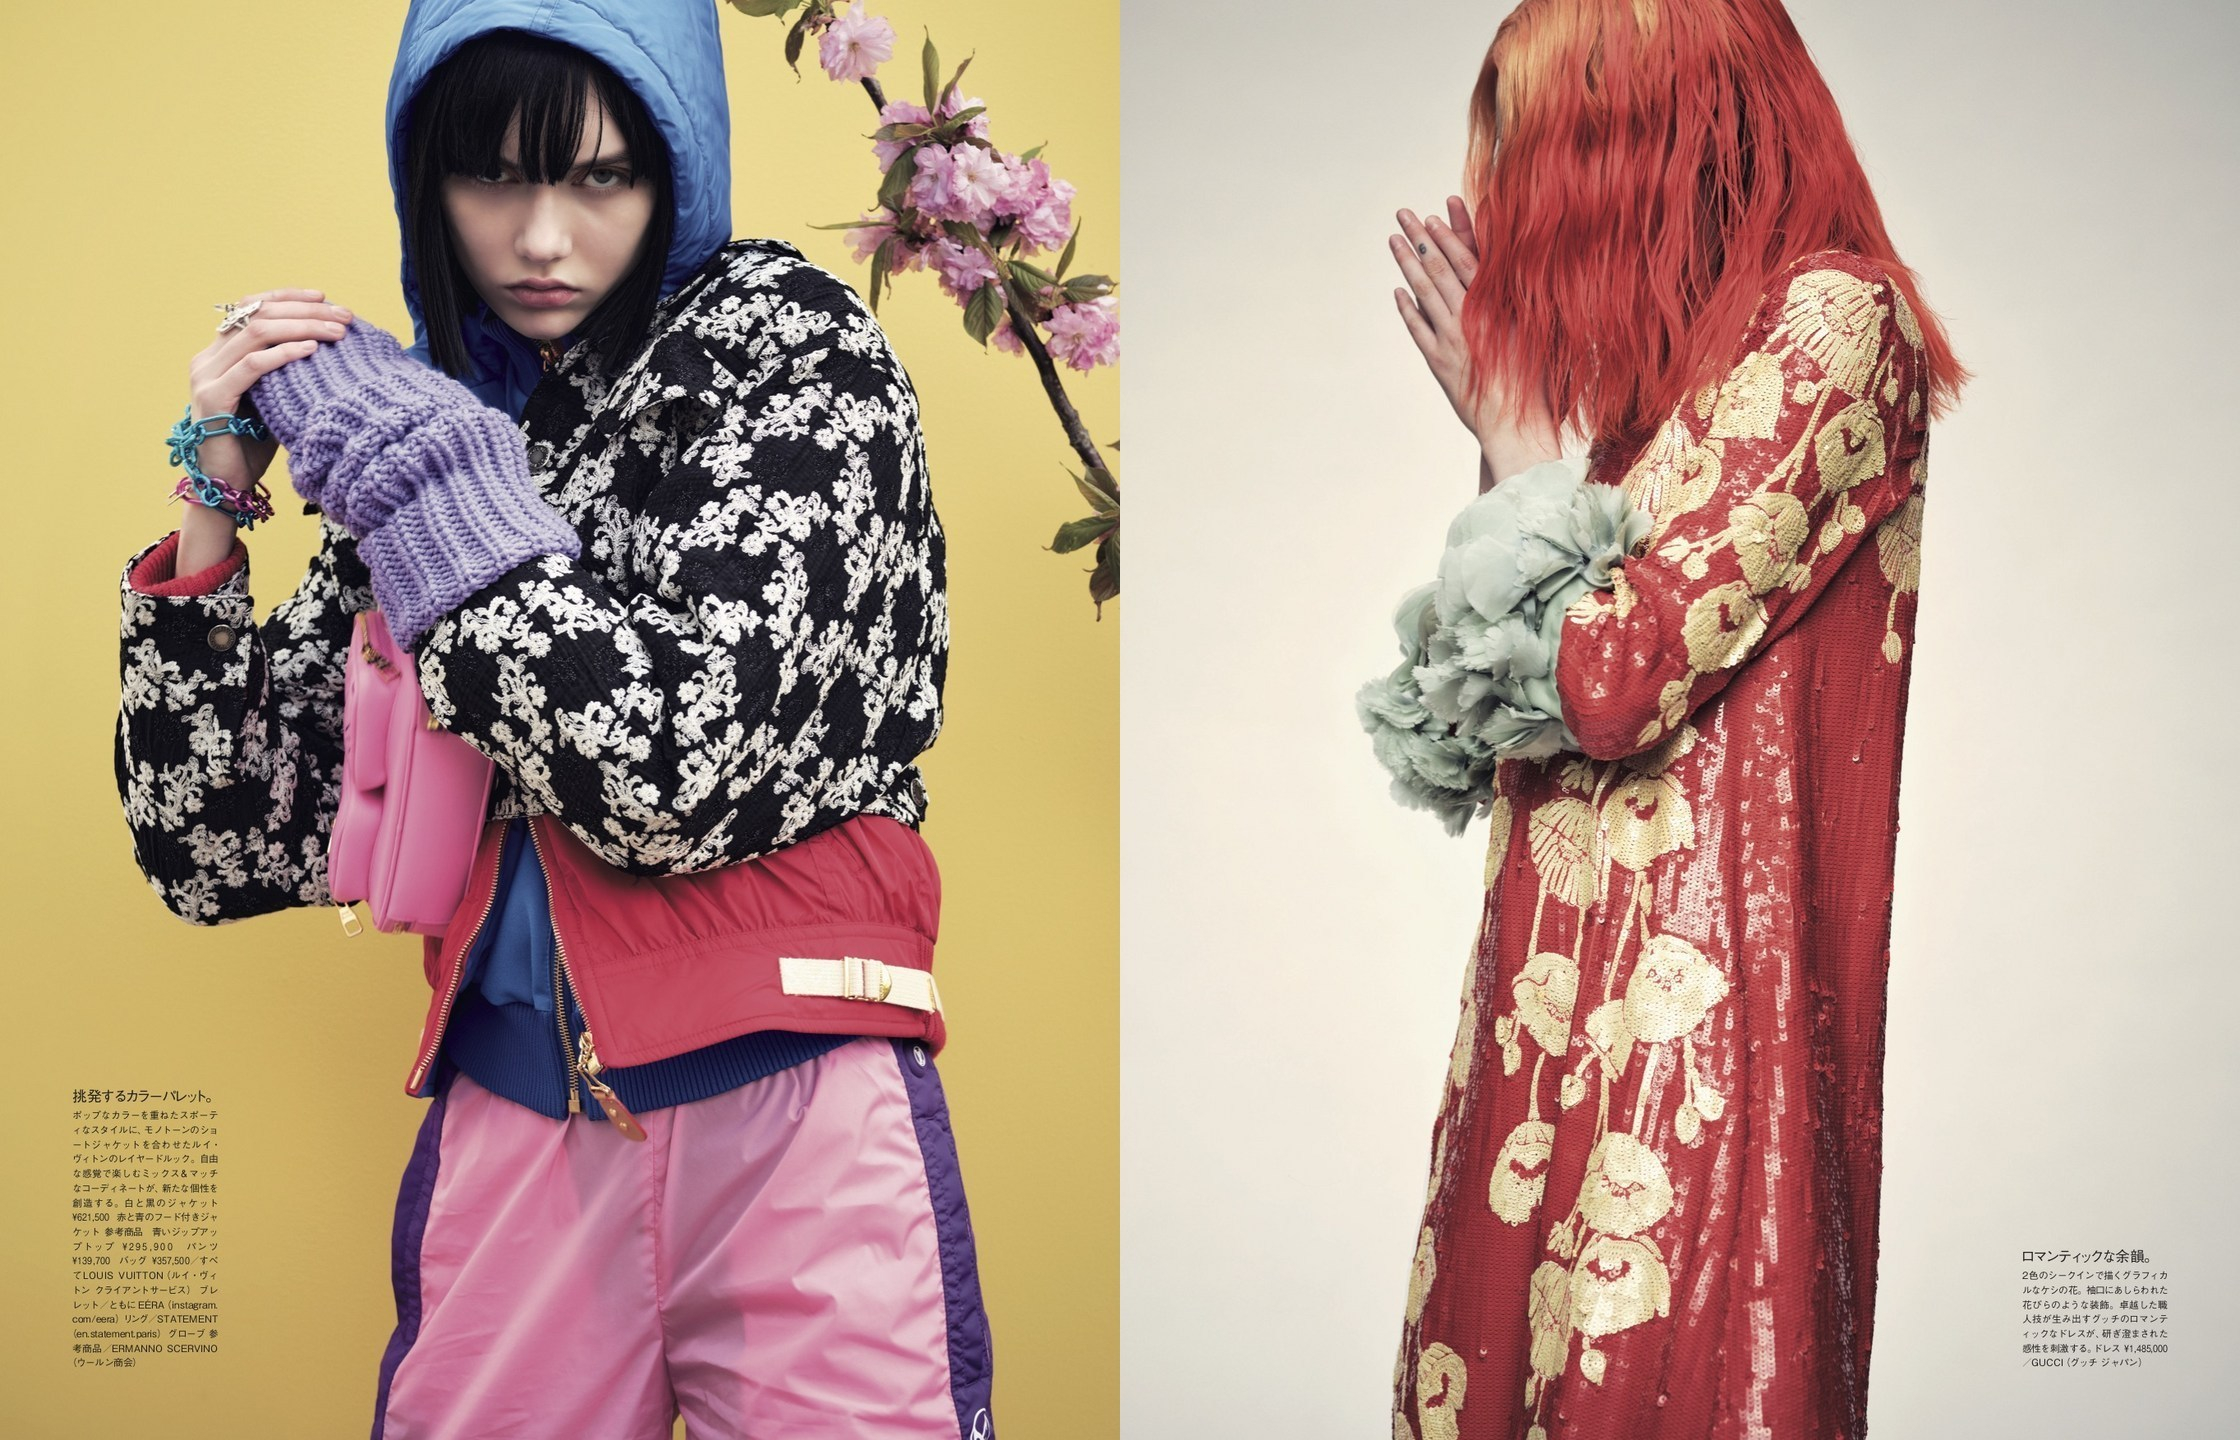 SV_Vogue Japan_She Walks in Colours_2.jpg